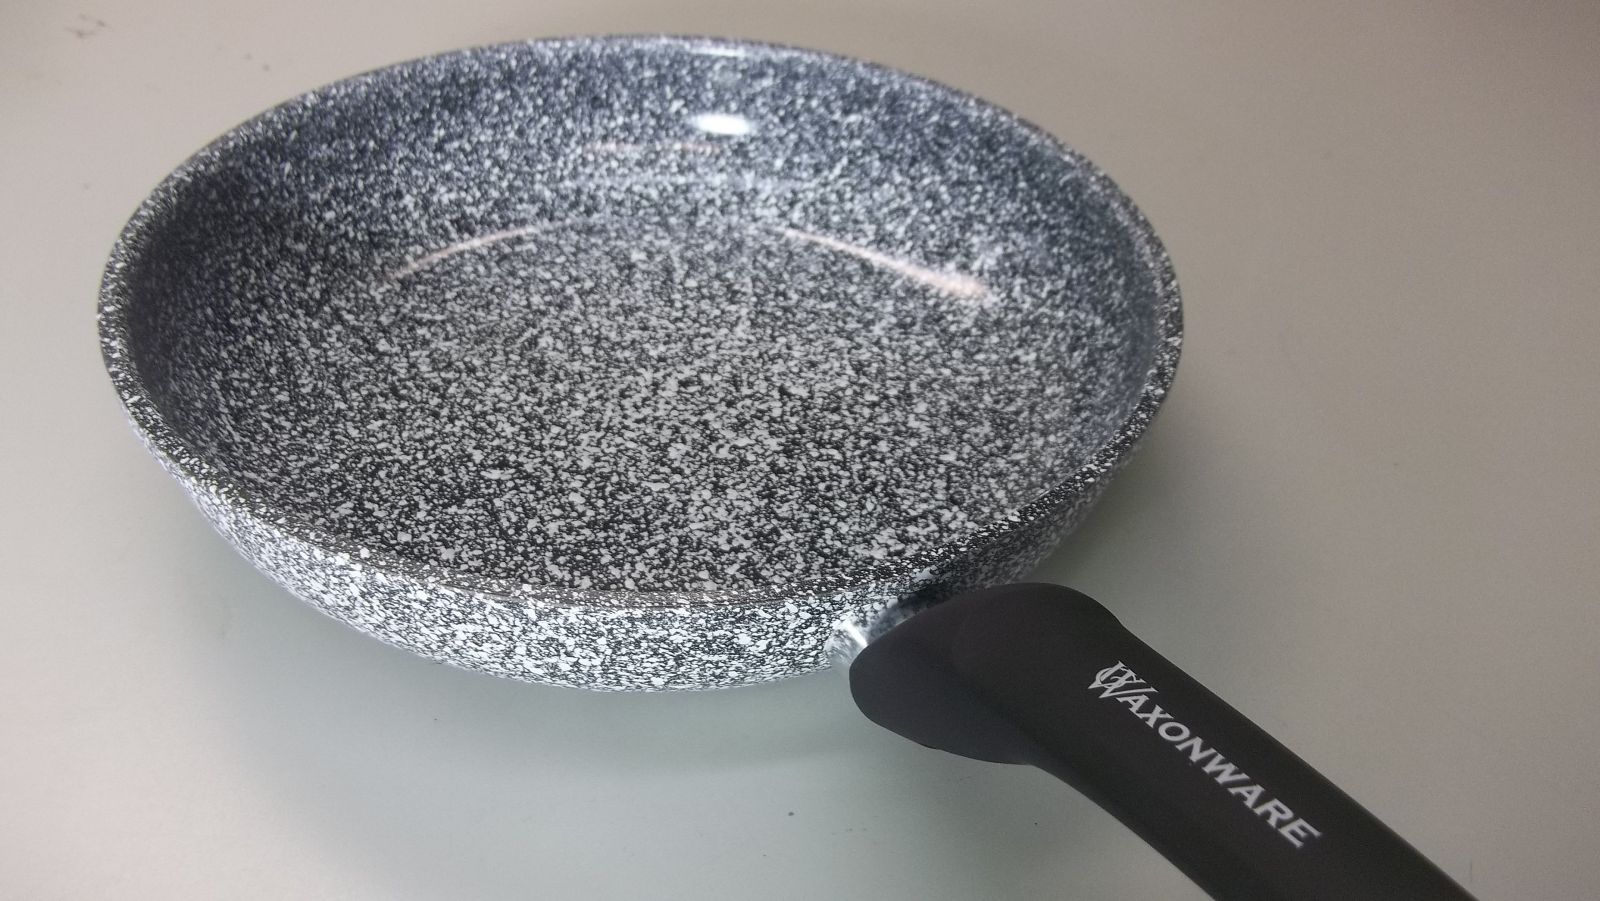 WaxonWare pan